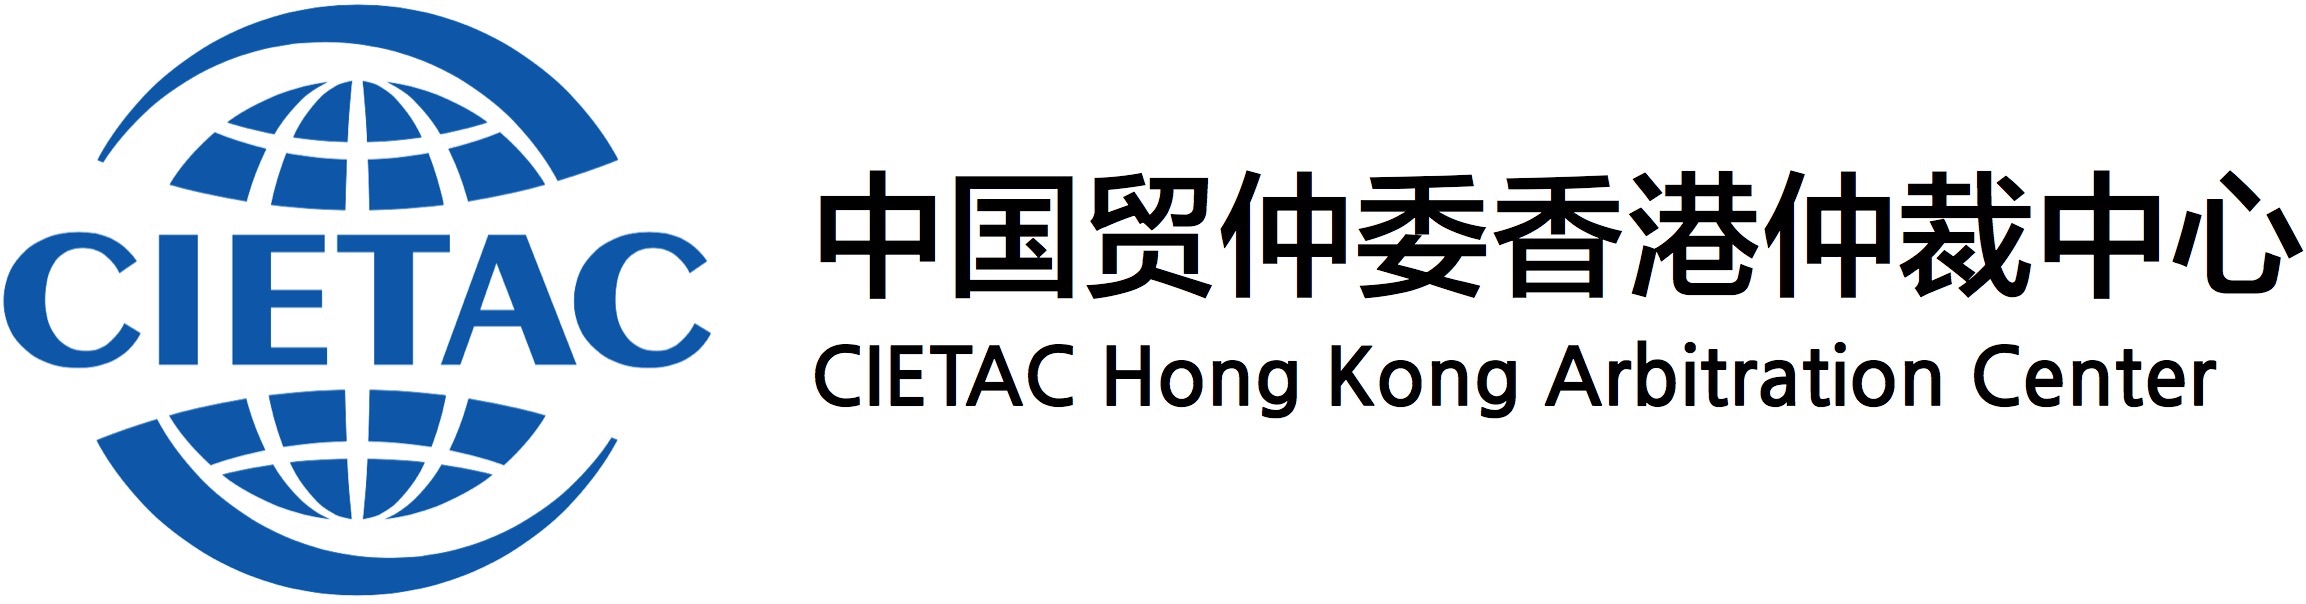 CIETAC Hong Kong Arbitration Center